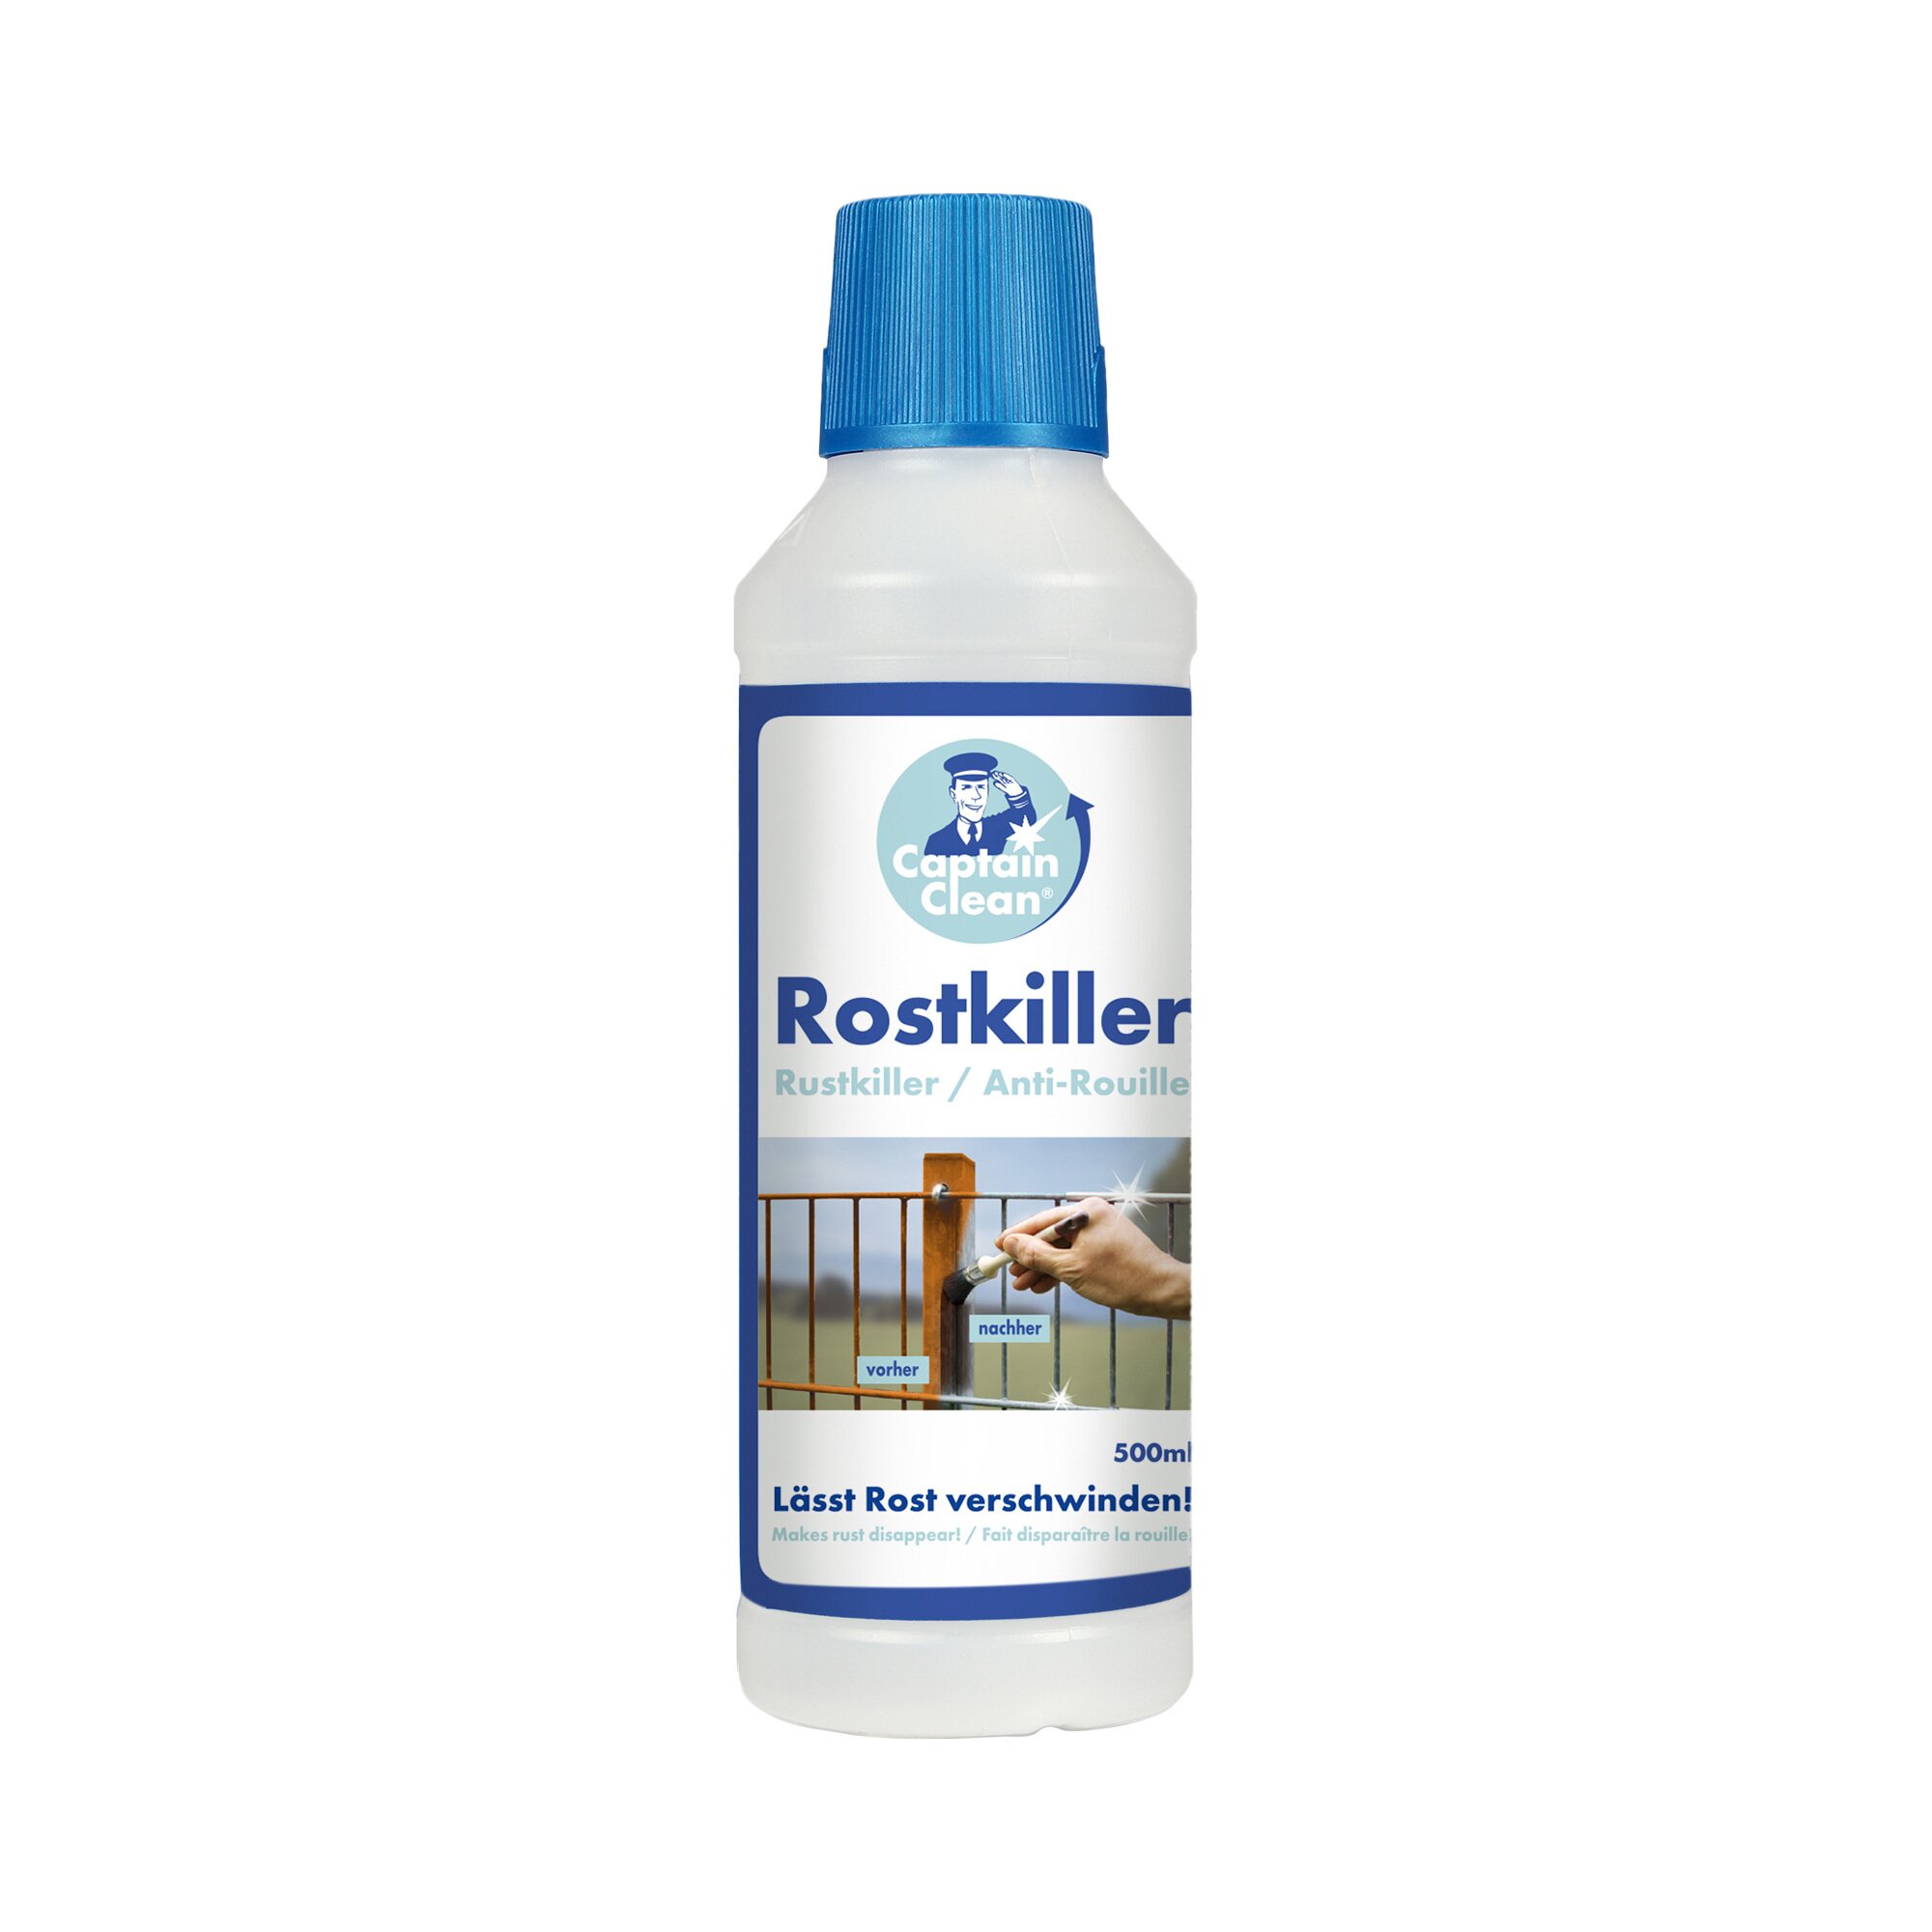 Anti-rouille « Rostkiller », 500 ml